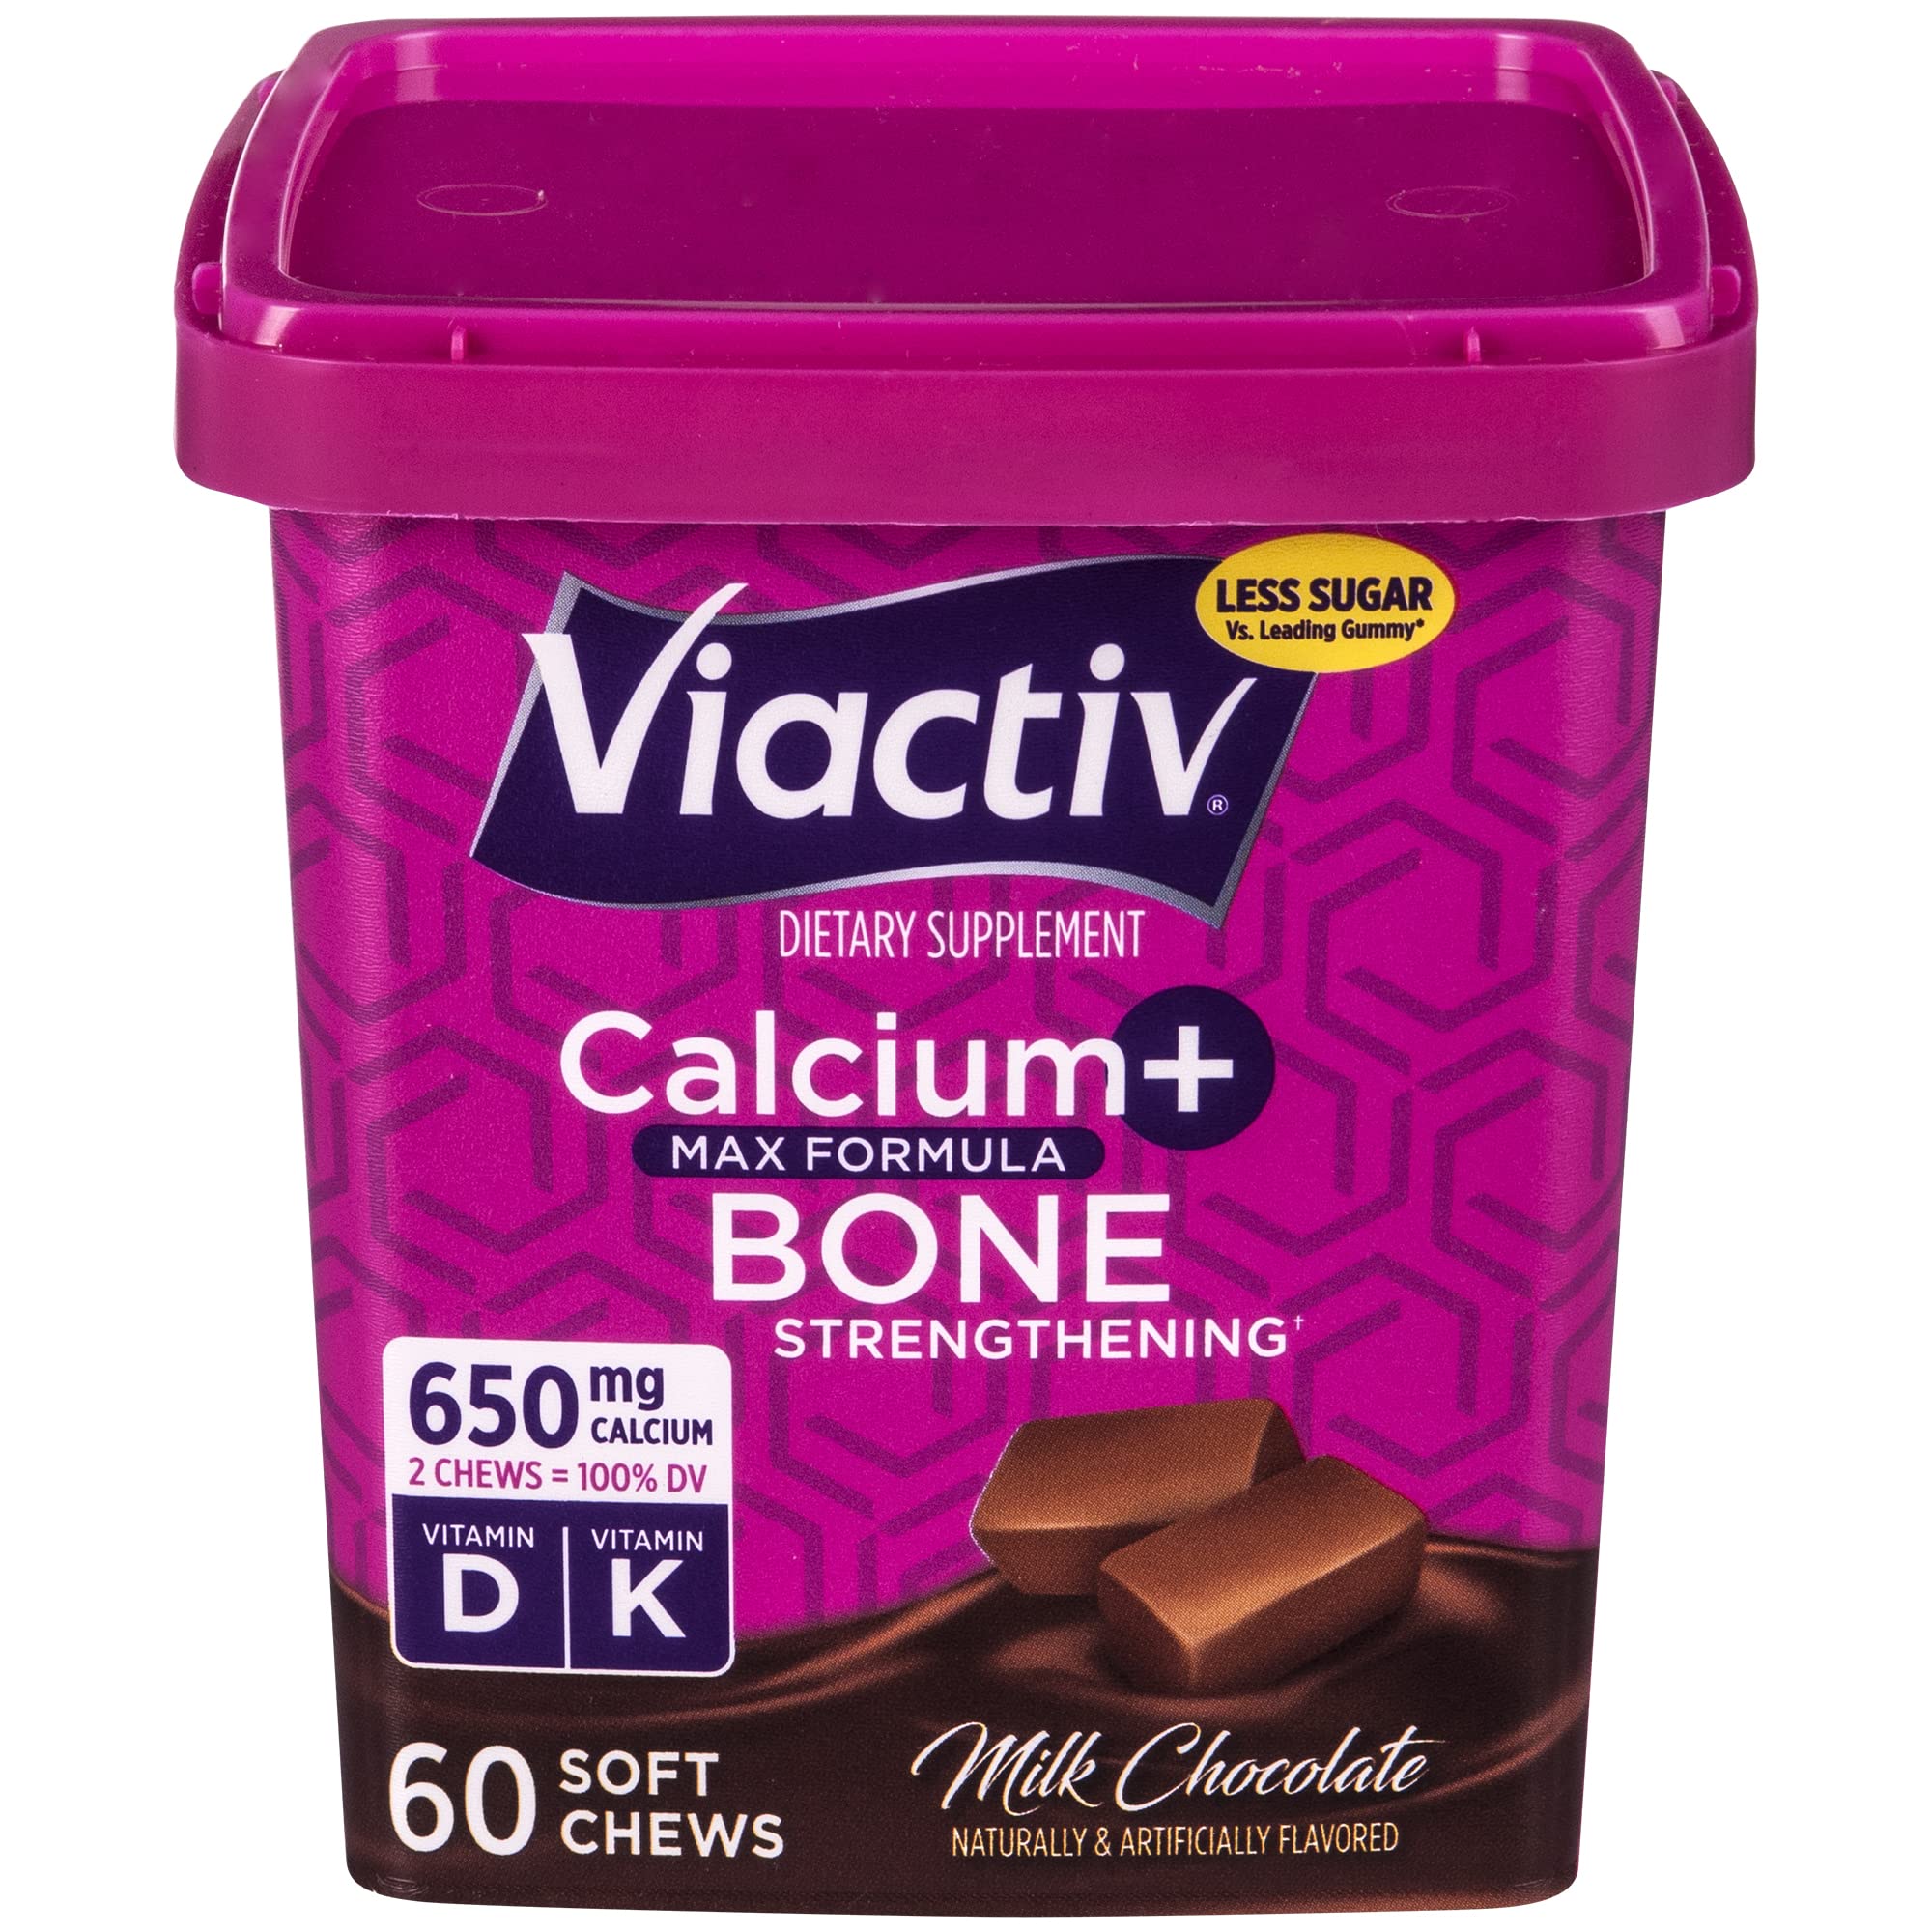 Viactiv Calcium +Vitamin D3 Supplement Soft Chews, Milk Chocolate, 60 Chews - Calcium Dietary Supplement for Bone Health